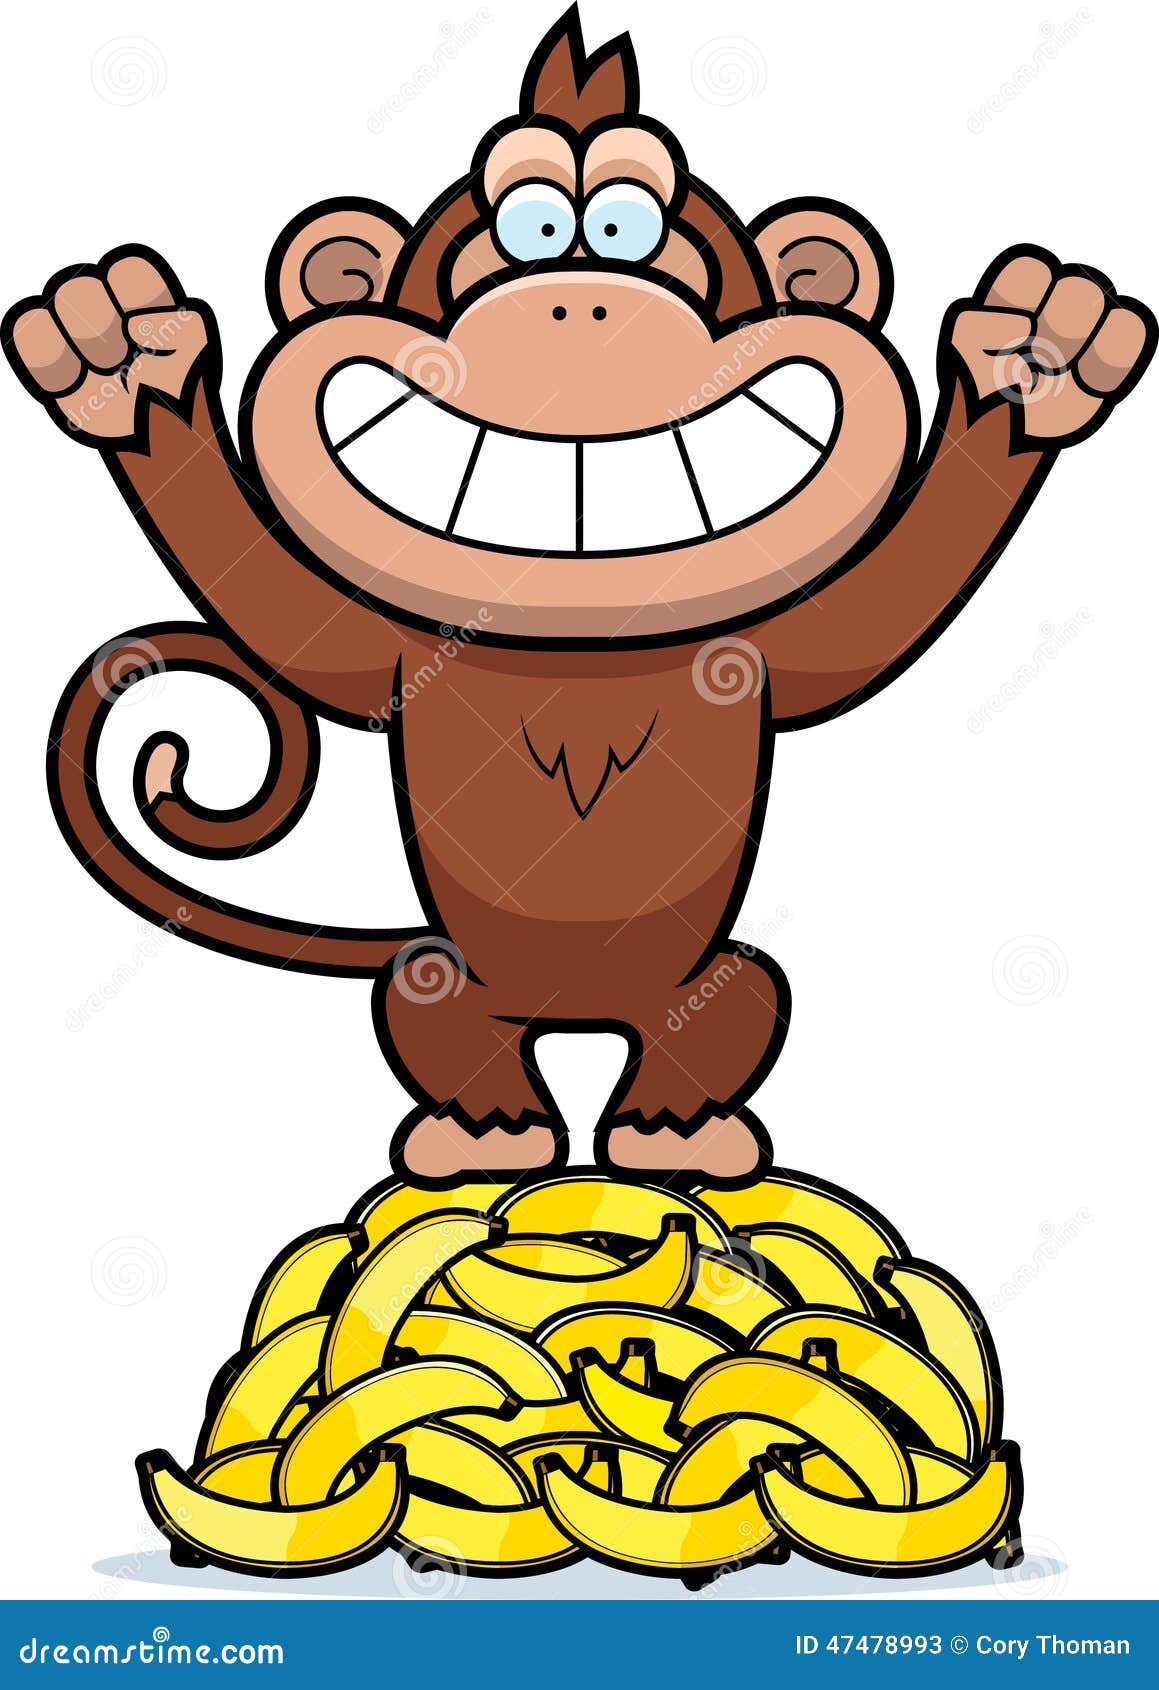 Cartoon Monkey Bananas stock vector. Illustration of pile - 47478993